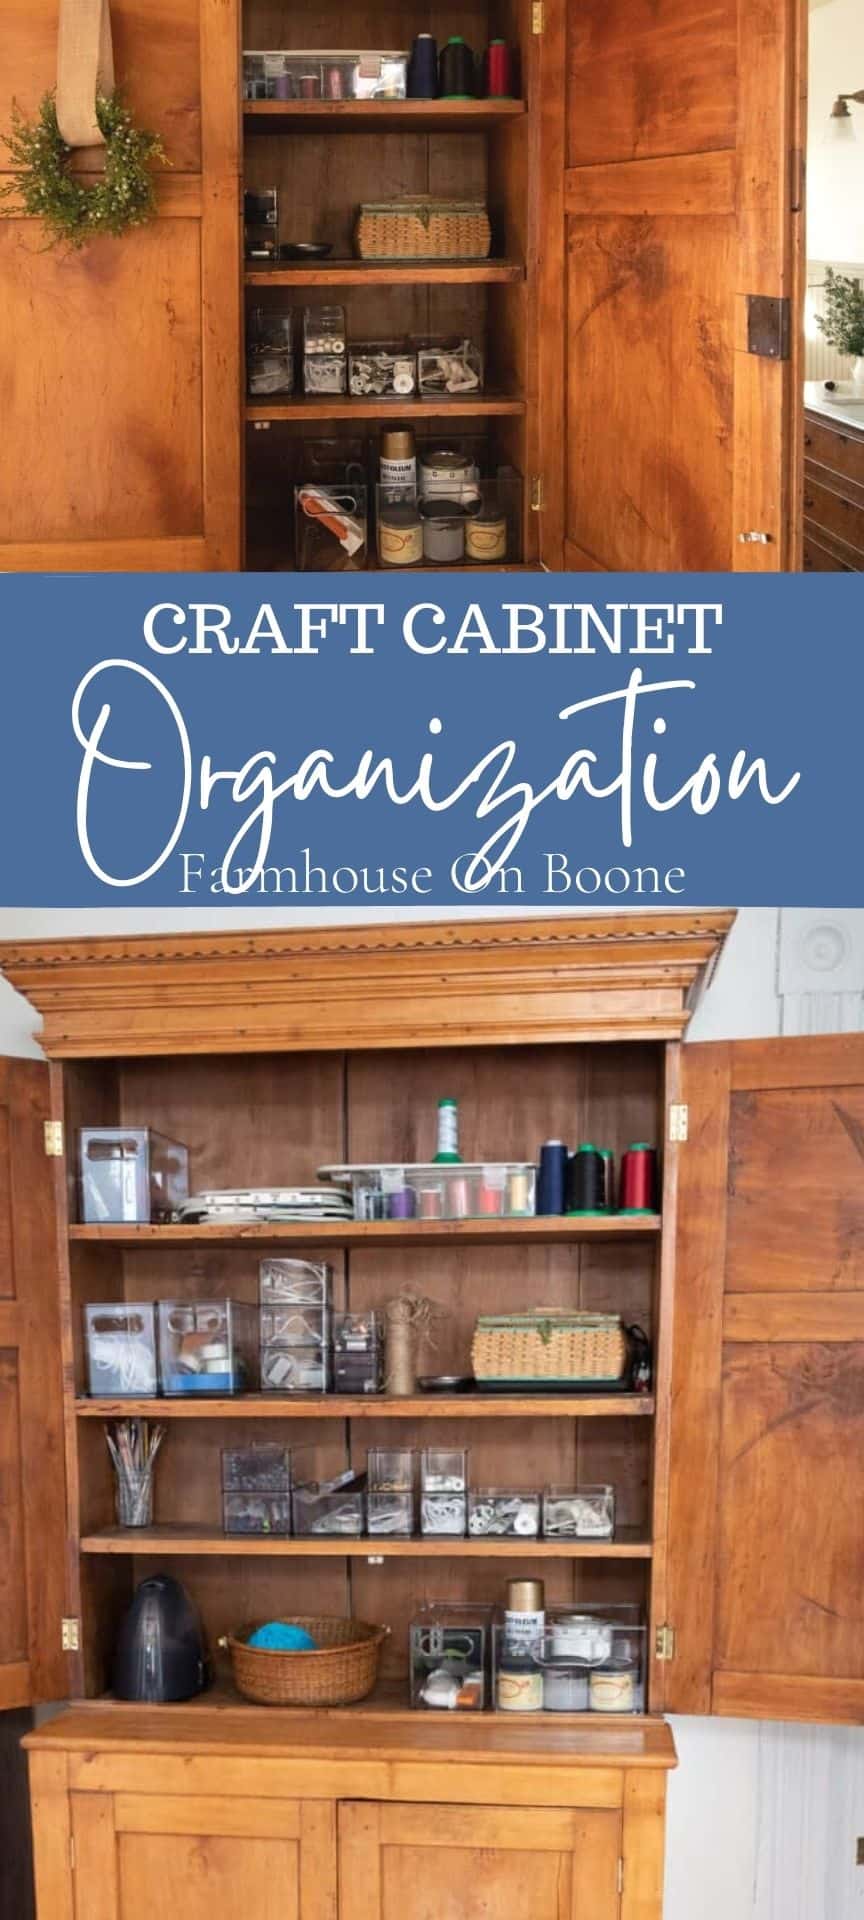 10 Pantry Organization Ideas to Inspire - Craft Klatch